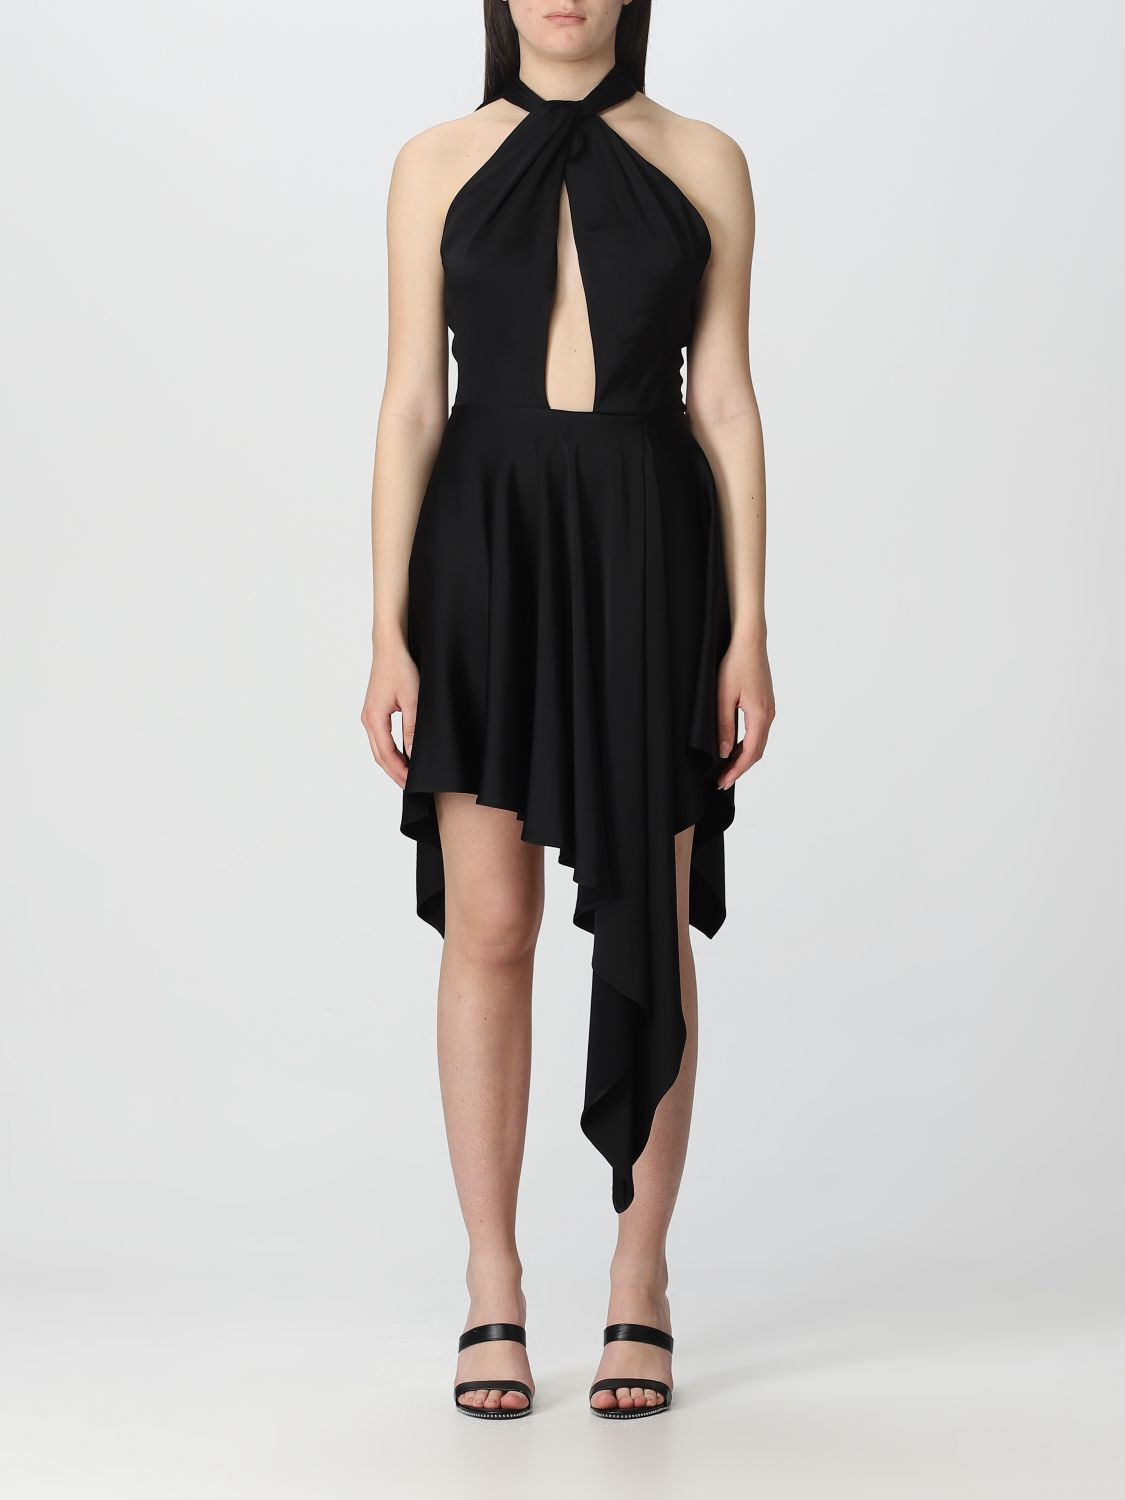 STELLA MCCARTNEY: dress for woman - Black | Stella Mccartney dress ...